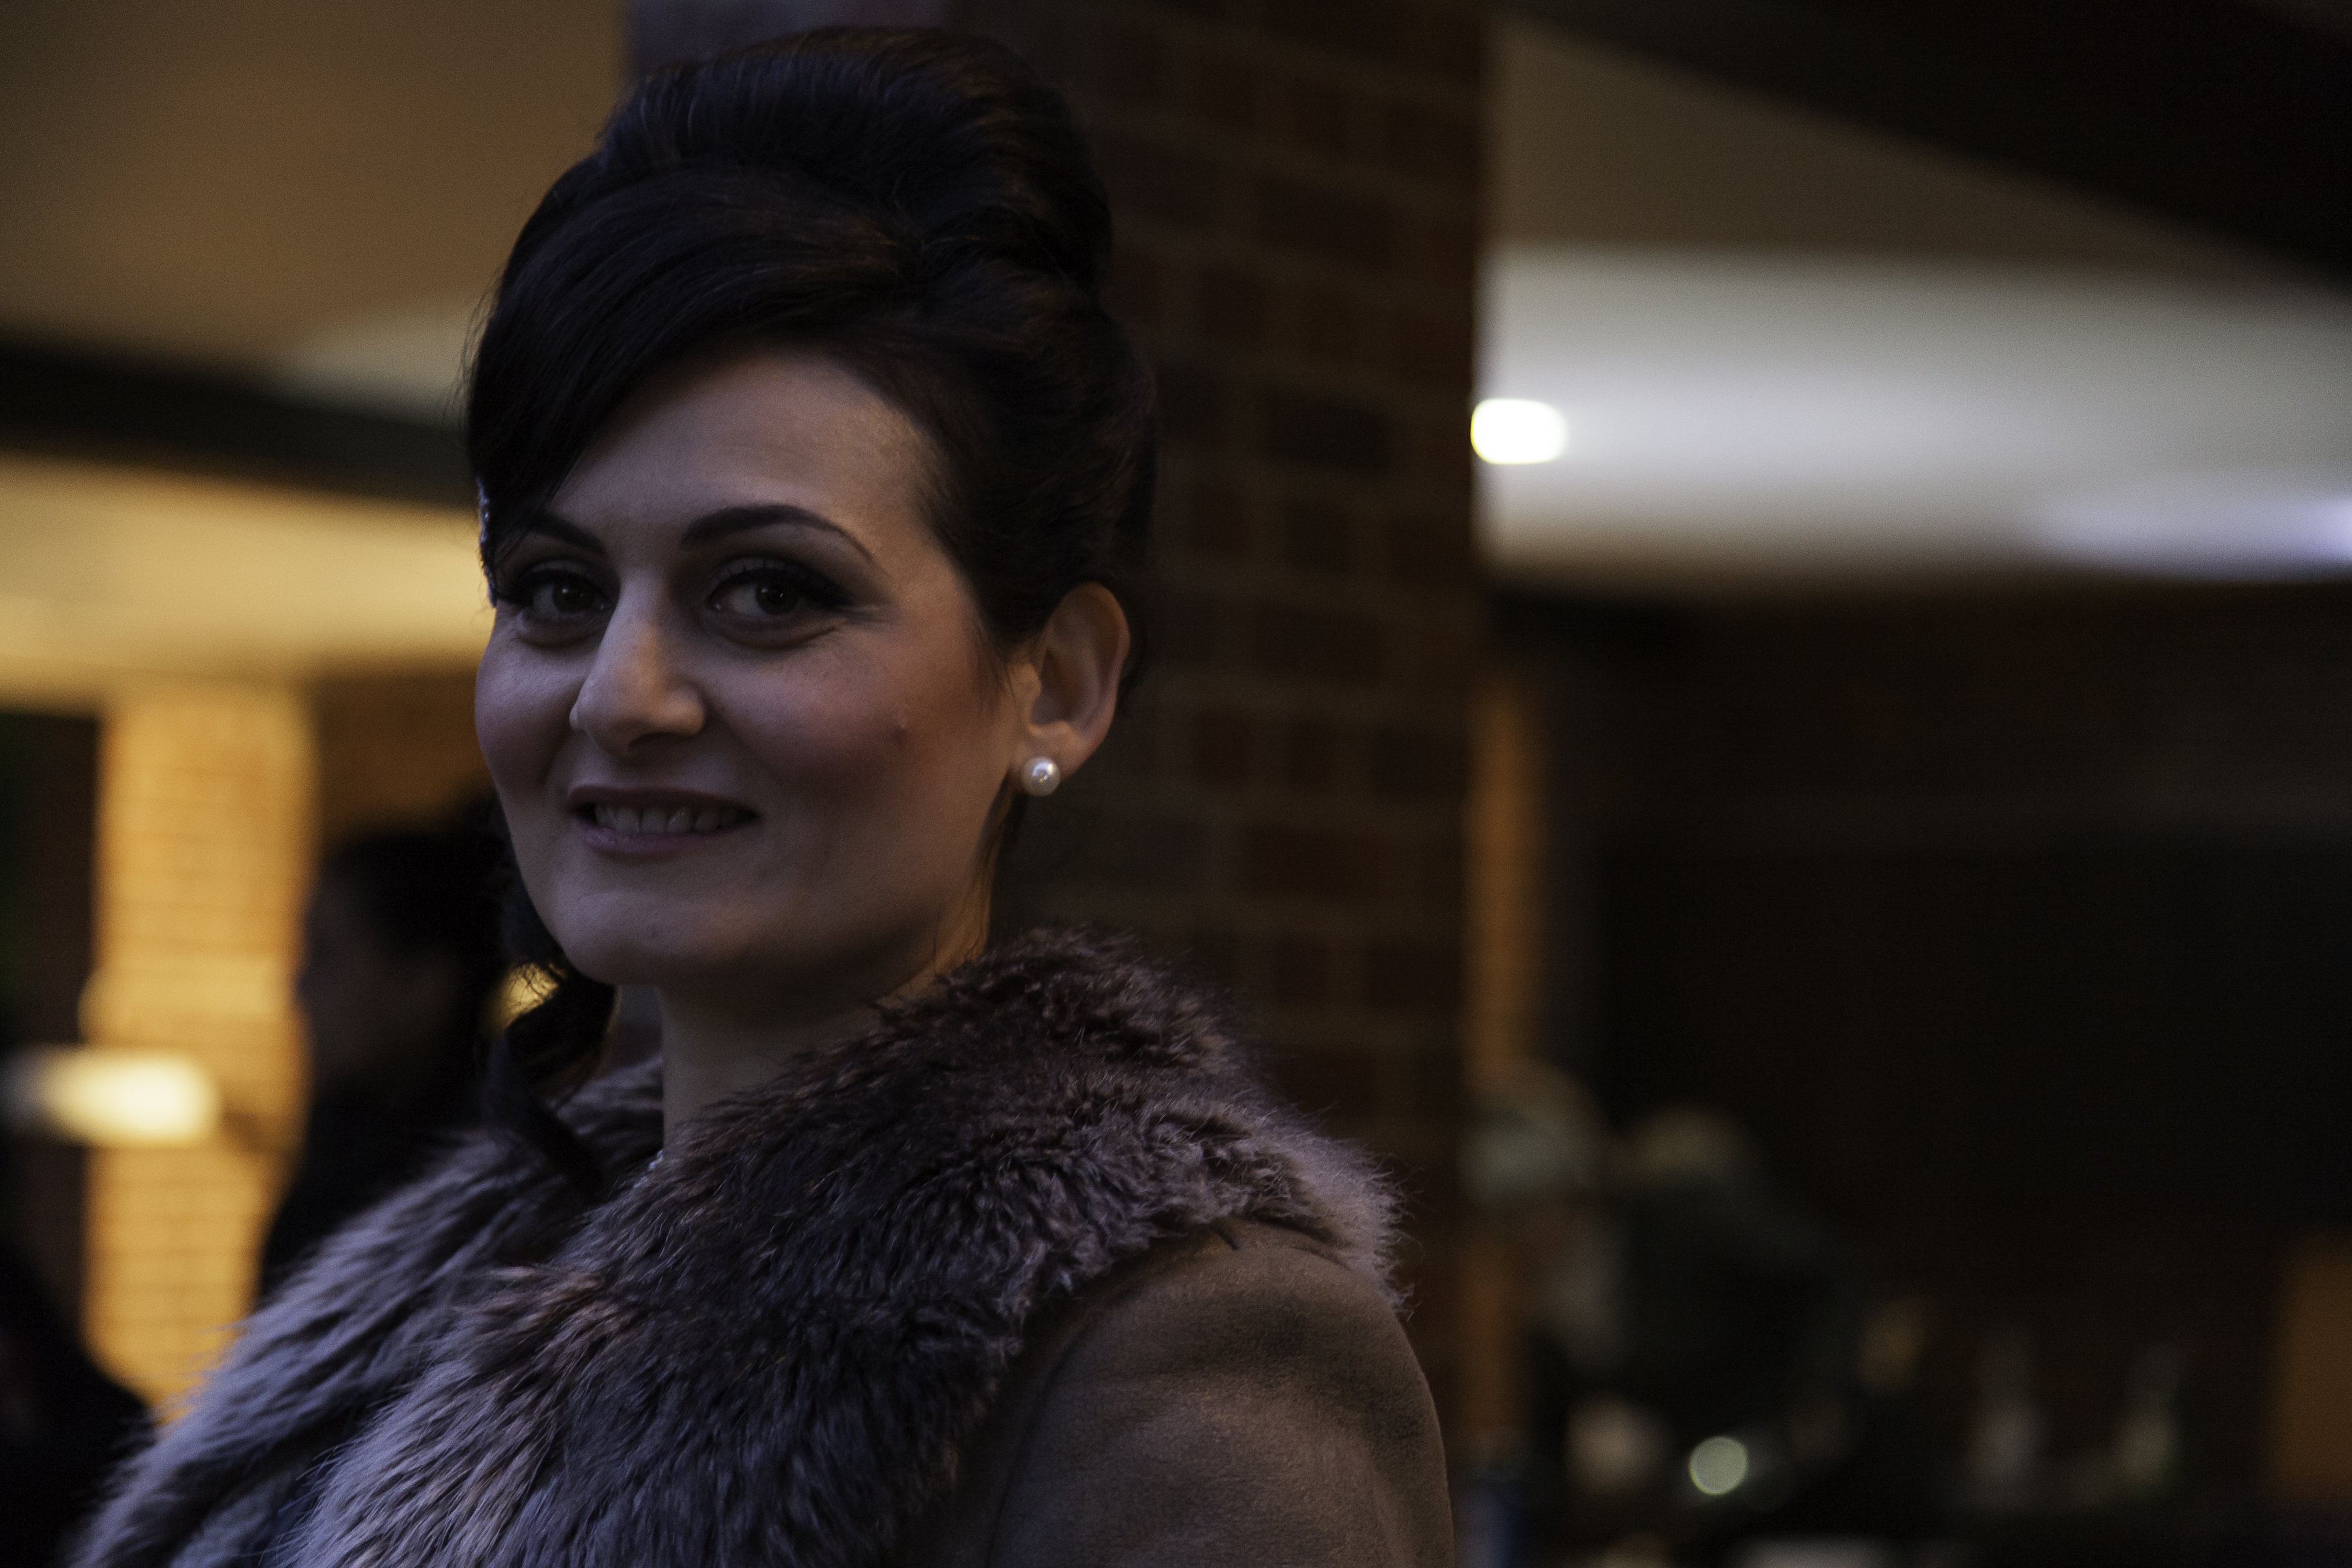 On Film Set of L'Assenza. Lia Alu as Giovanna Party Hostess. Location Esher, UK.